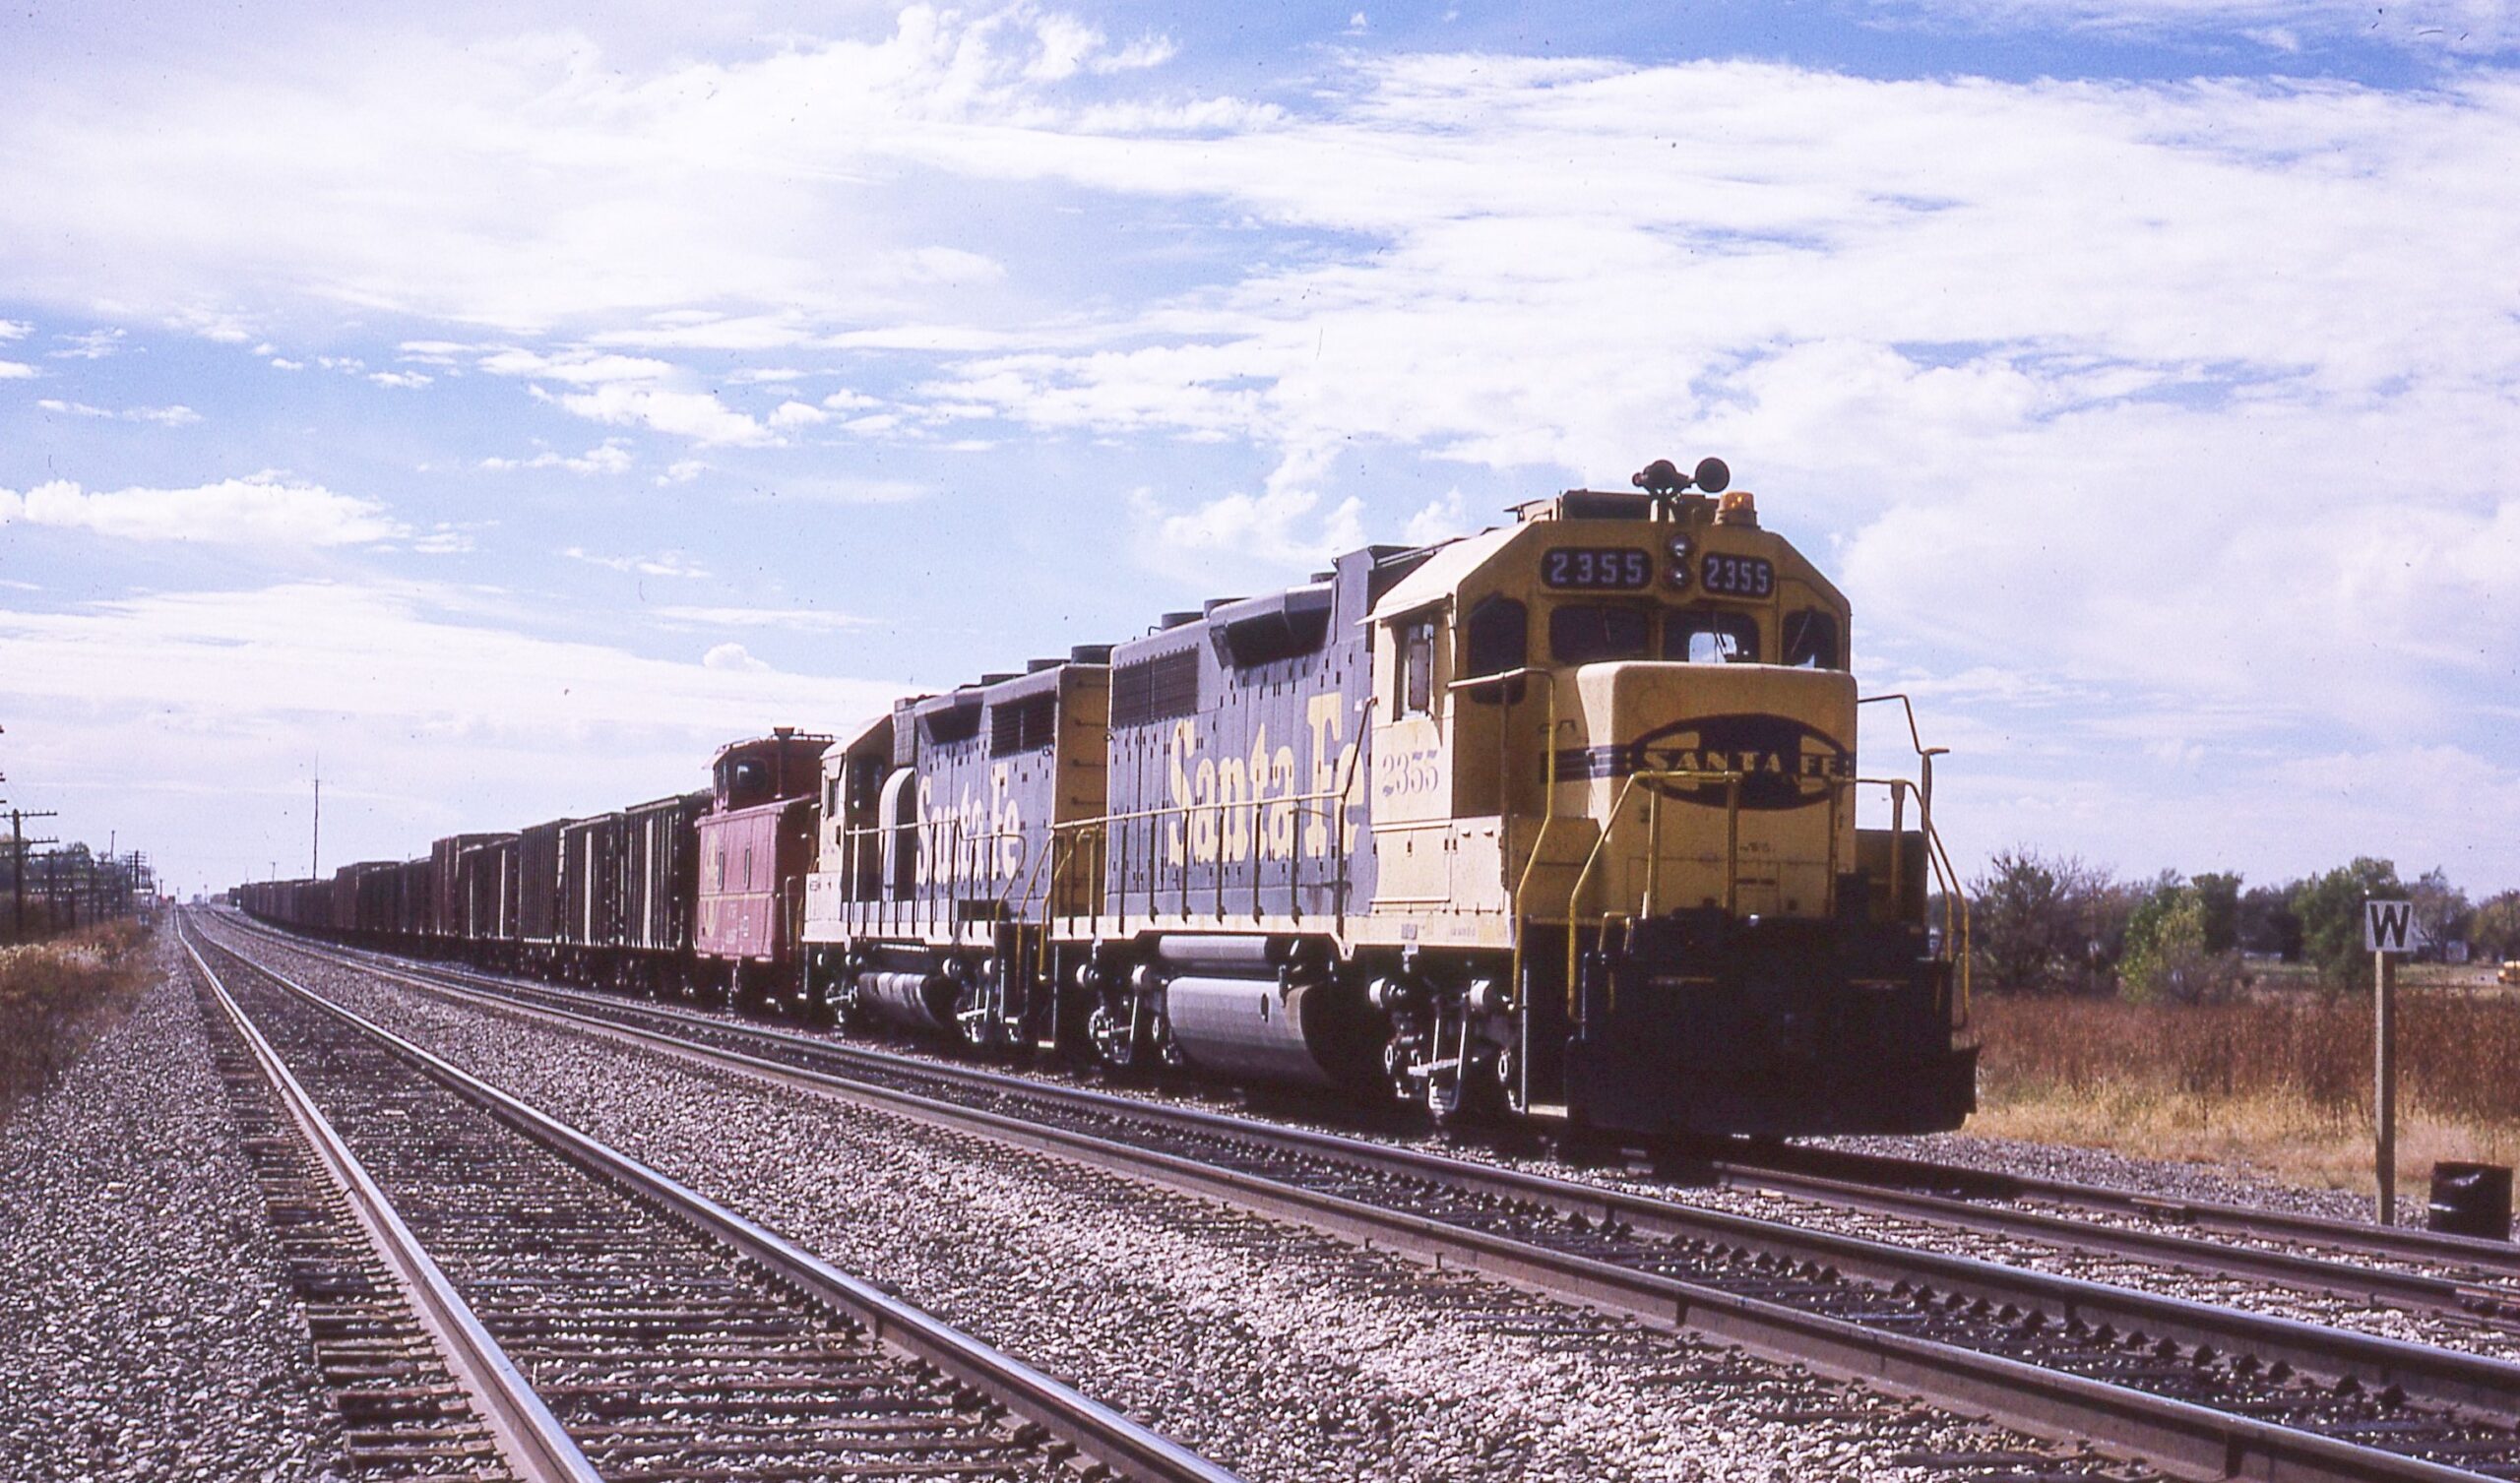 Atchison Topeka and Santa Fe | Cassoday, Kansas | GP38u 2305+ 1 | Coal train | October 21, 1989 | Dave Rector photoTS